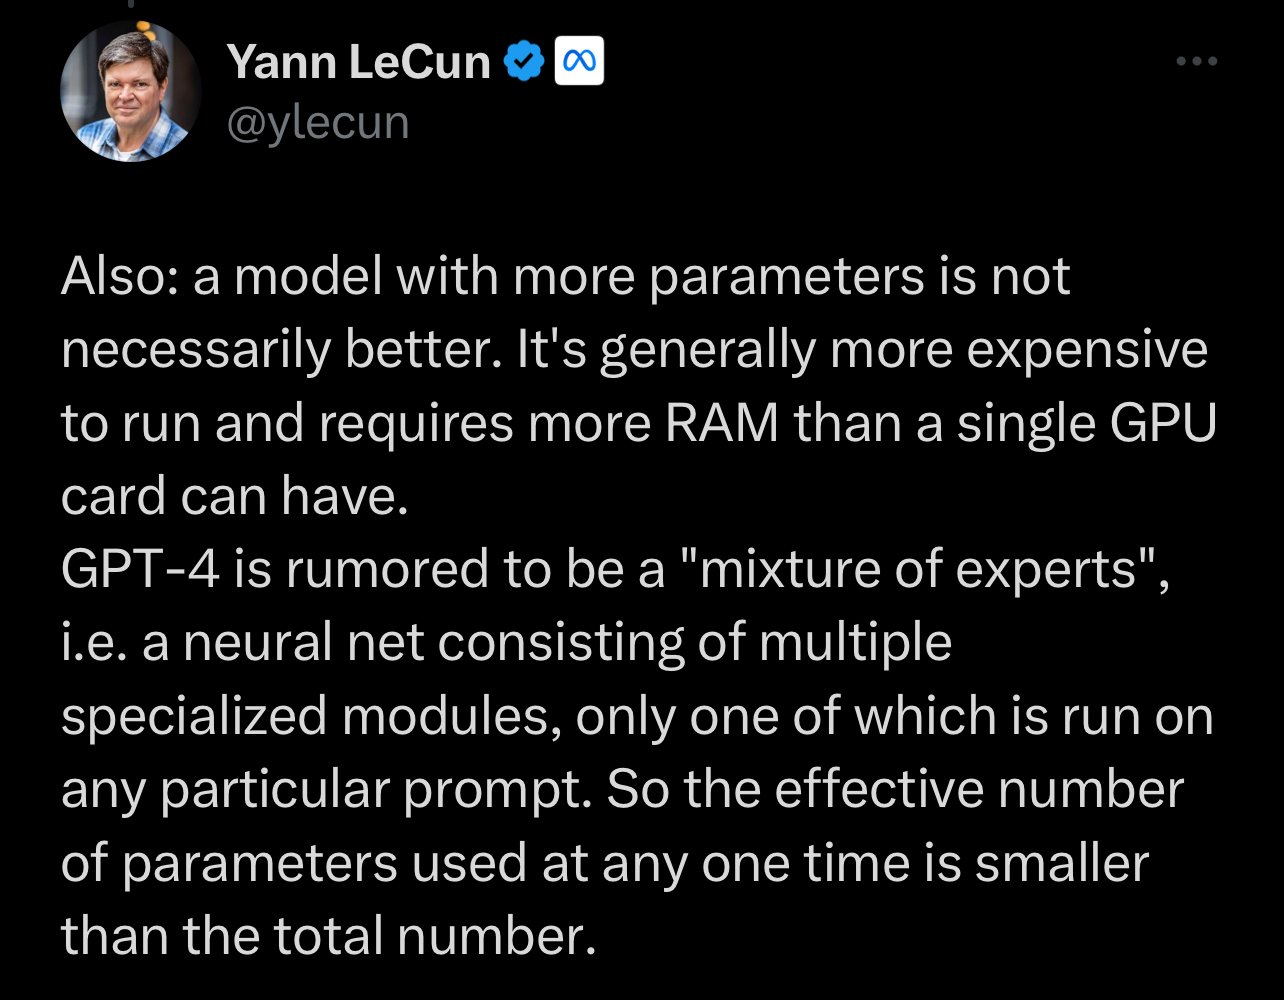 Second tweet from Yann LeCun criticizing journalists talking nonsense about billions of parameters